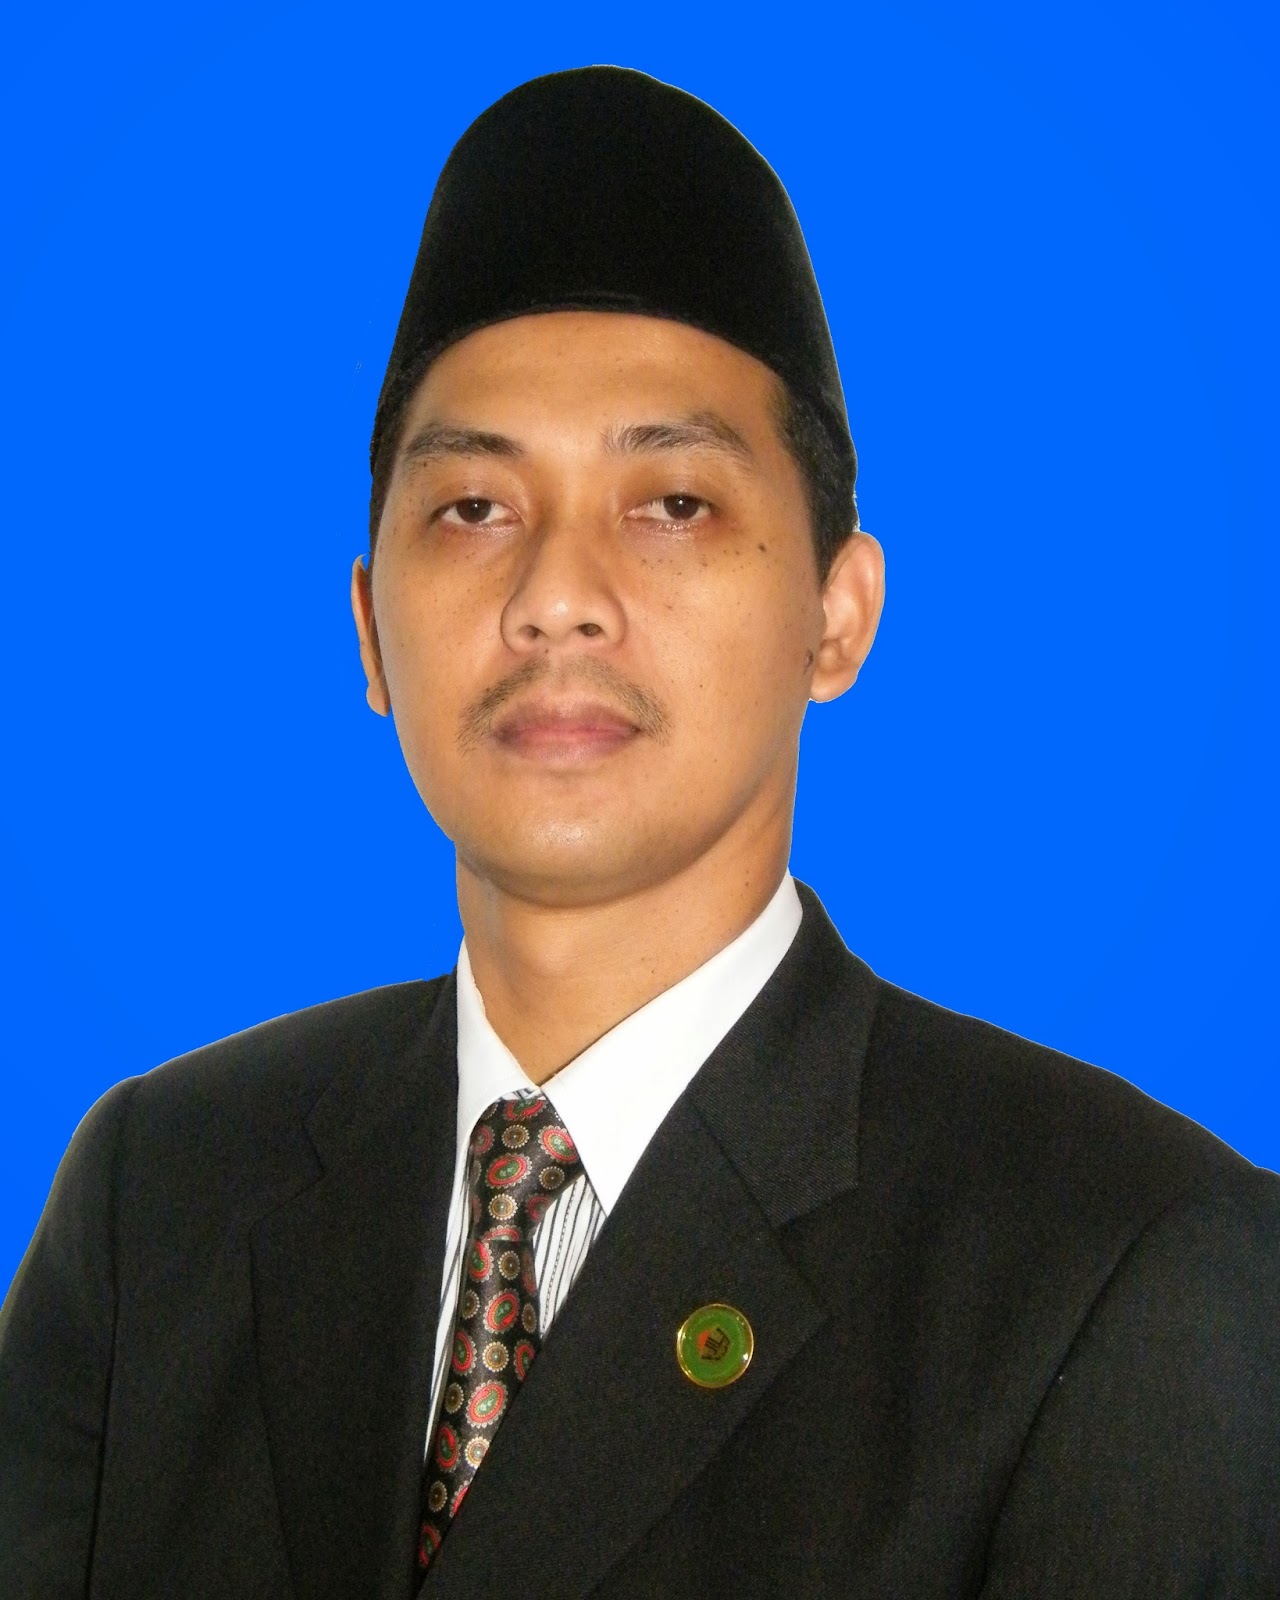 En. Mohamed Zamri Bin Basir